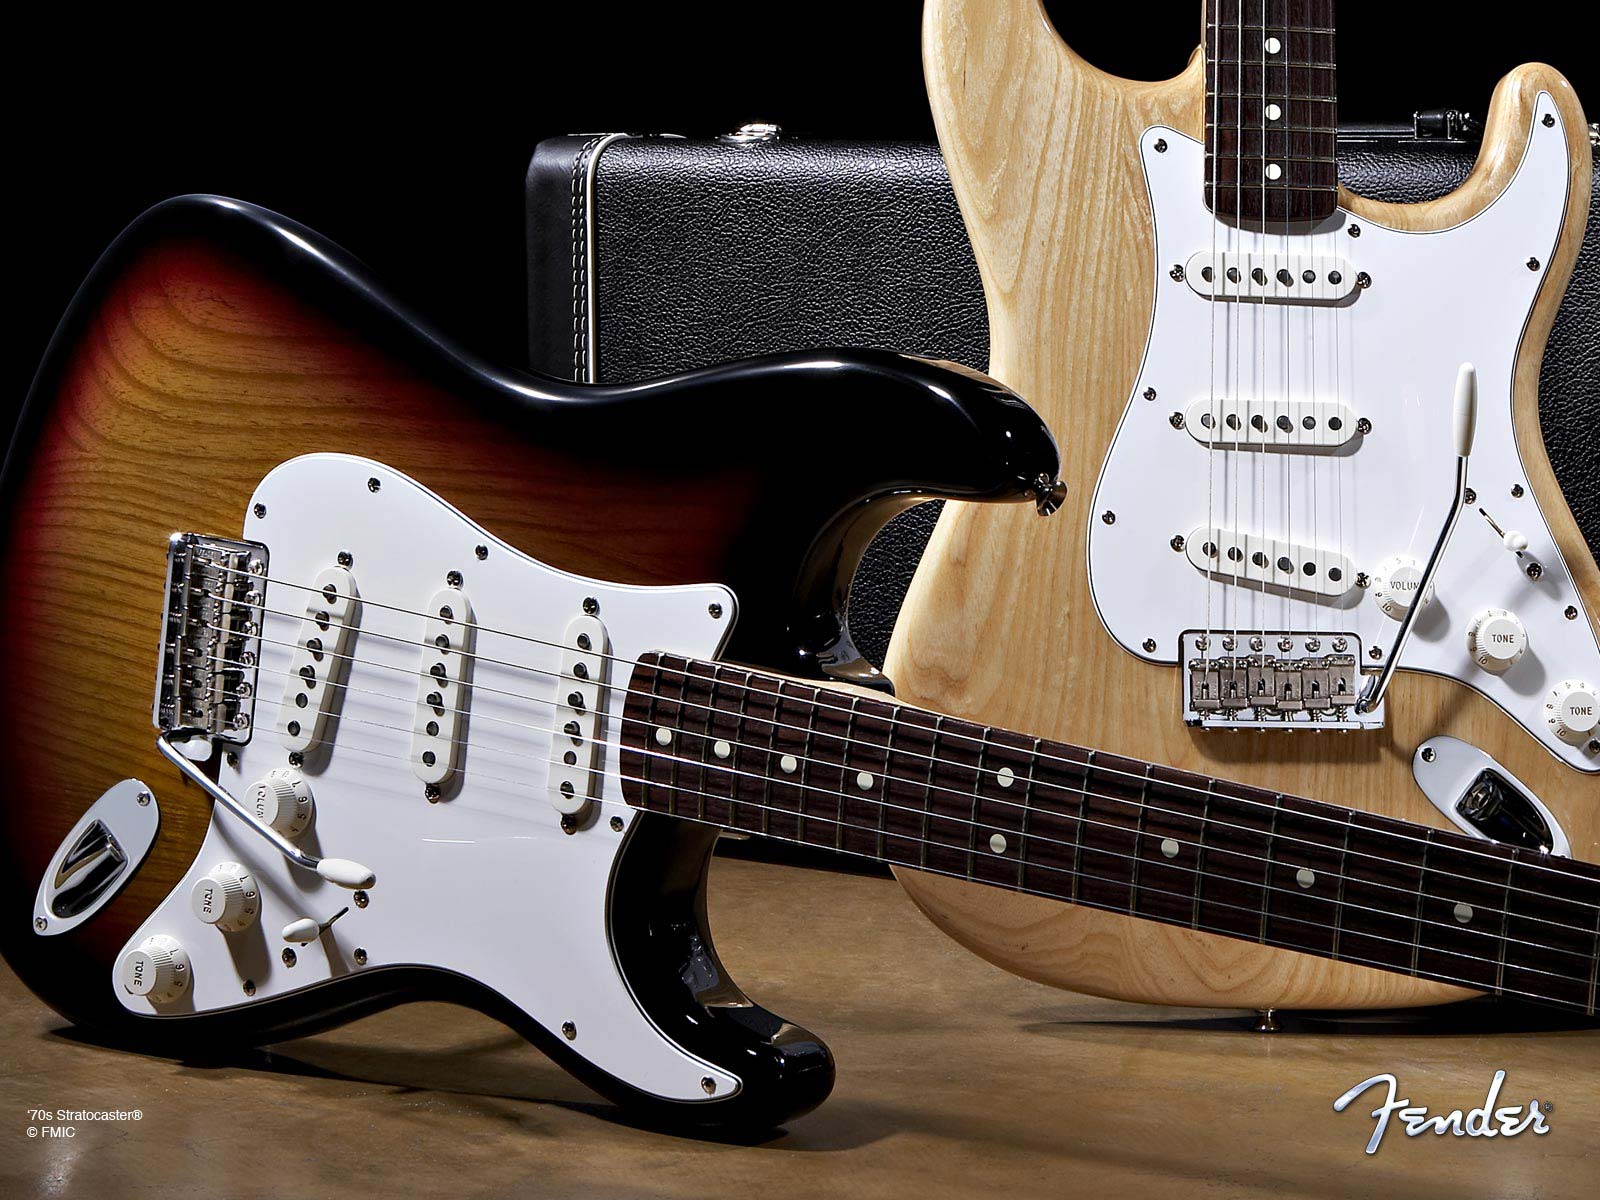 Music Fender Guitars Fender Stratocaster Wallpapers Hd Desktop And Mobile Backgrounds